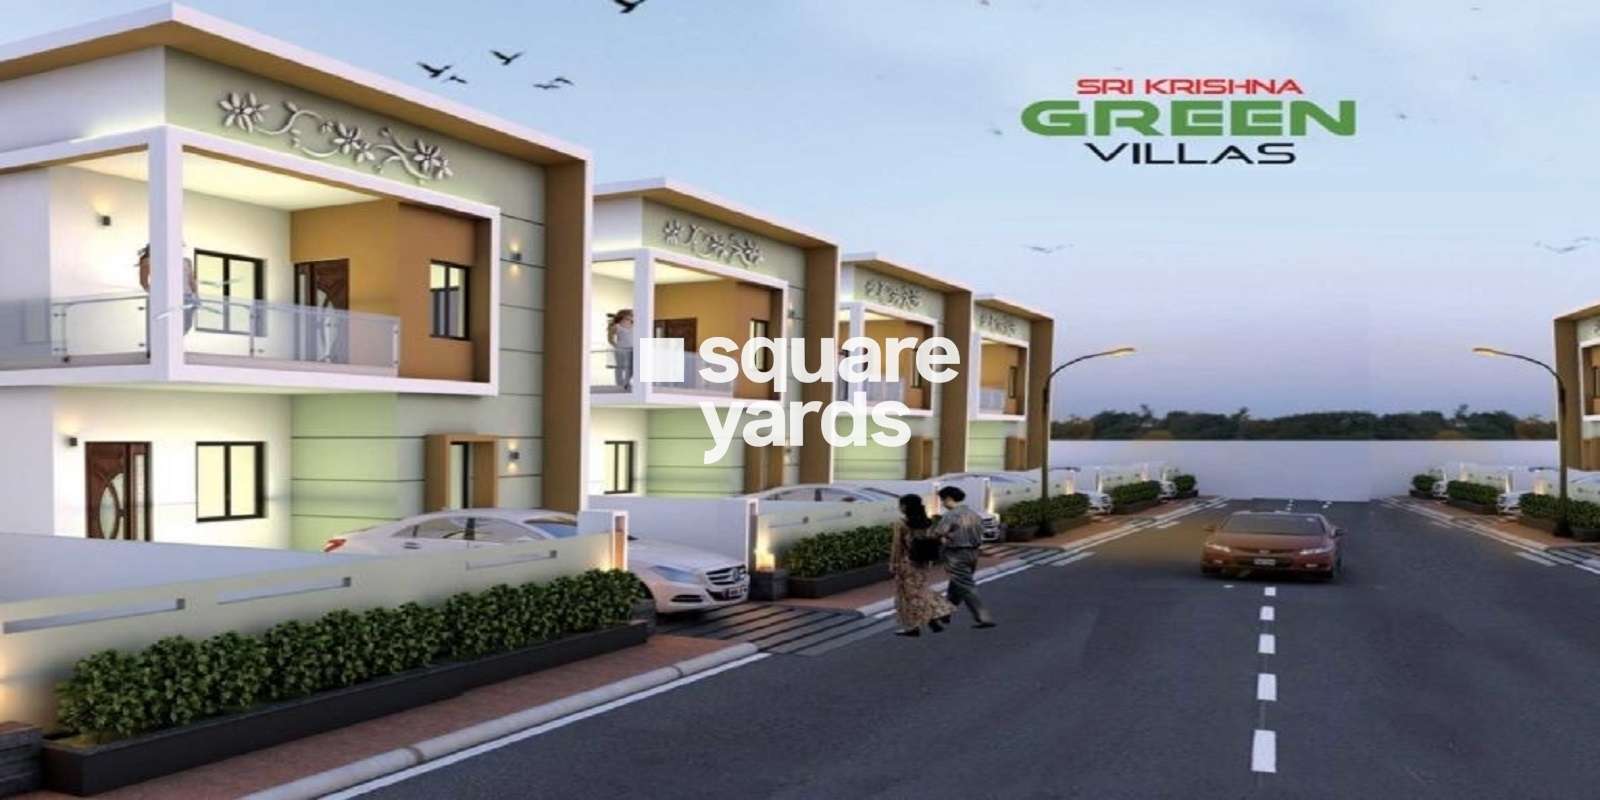 STBL Sri Krishna Green Villas Cover Image